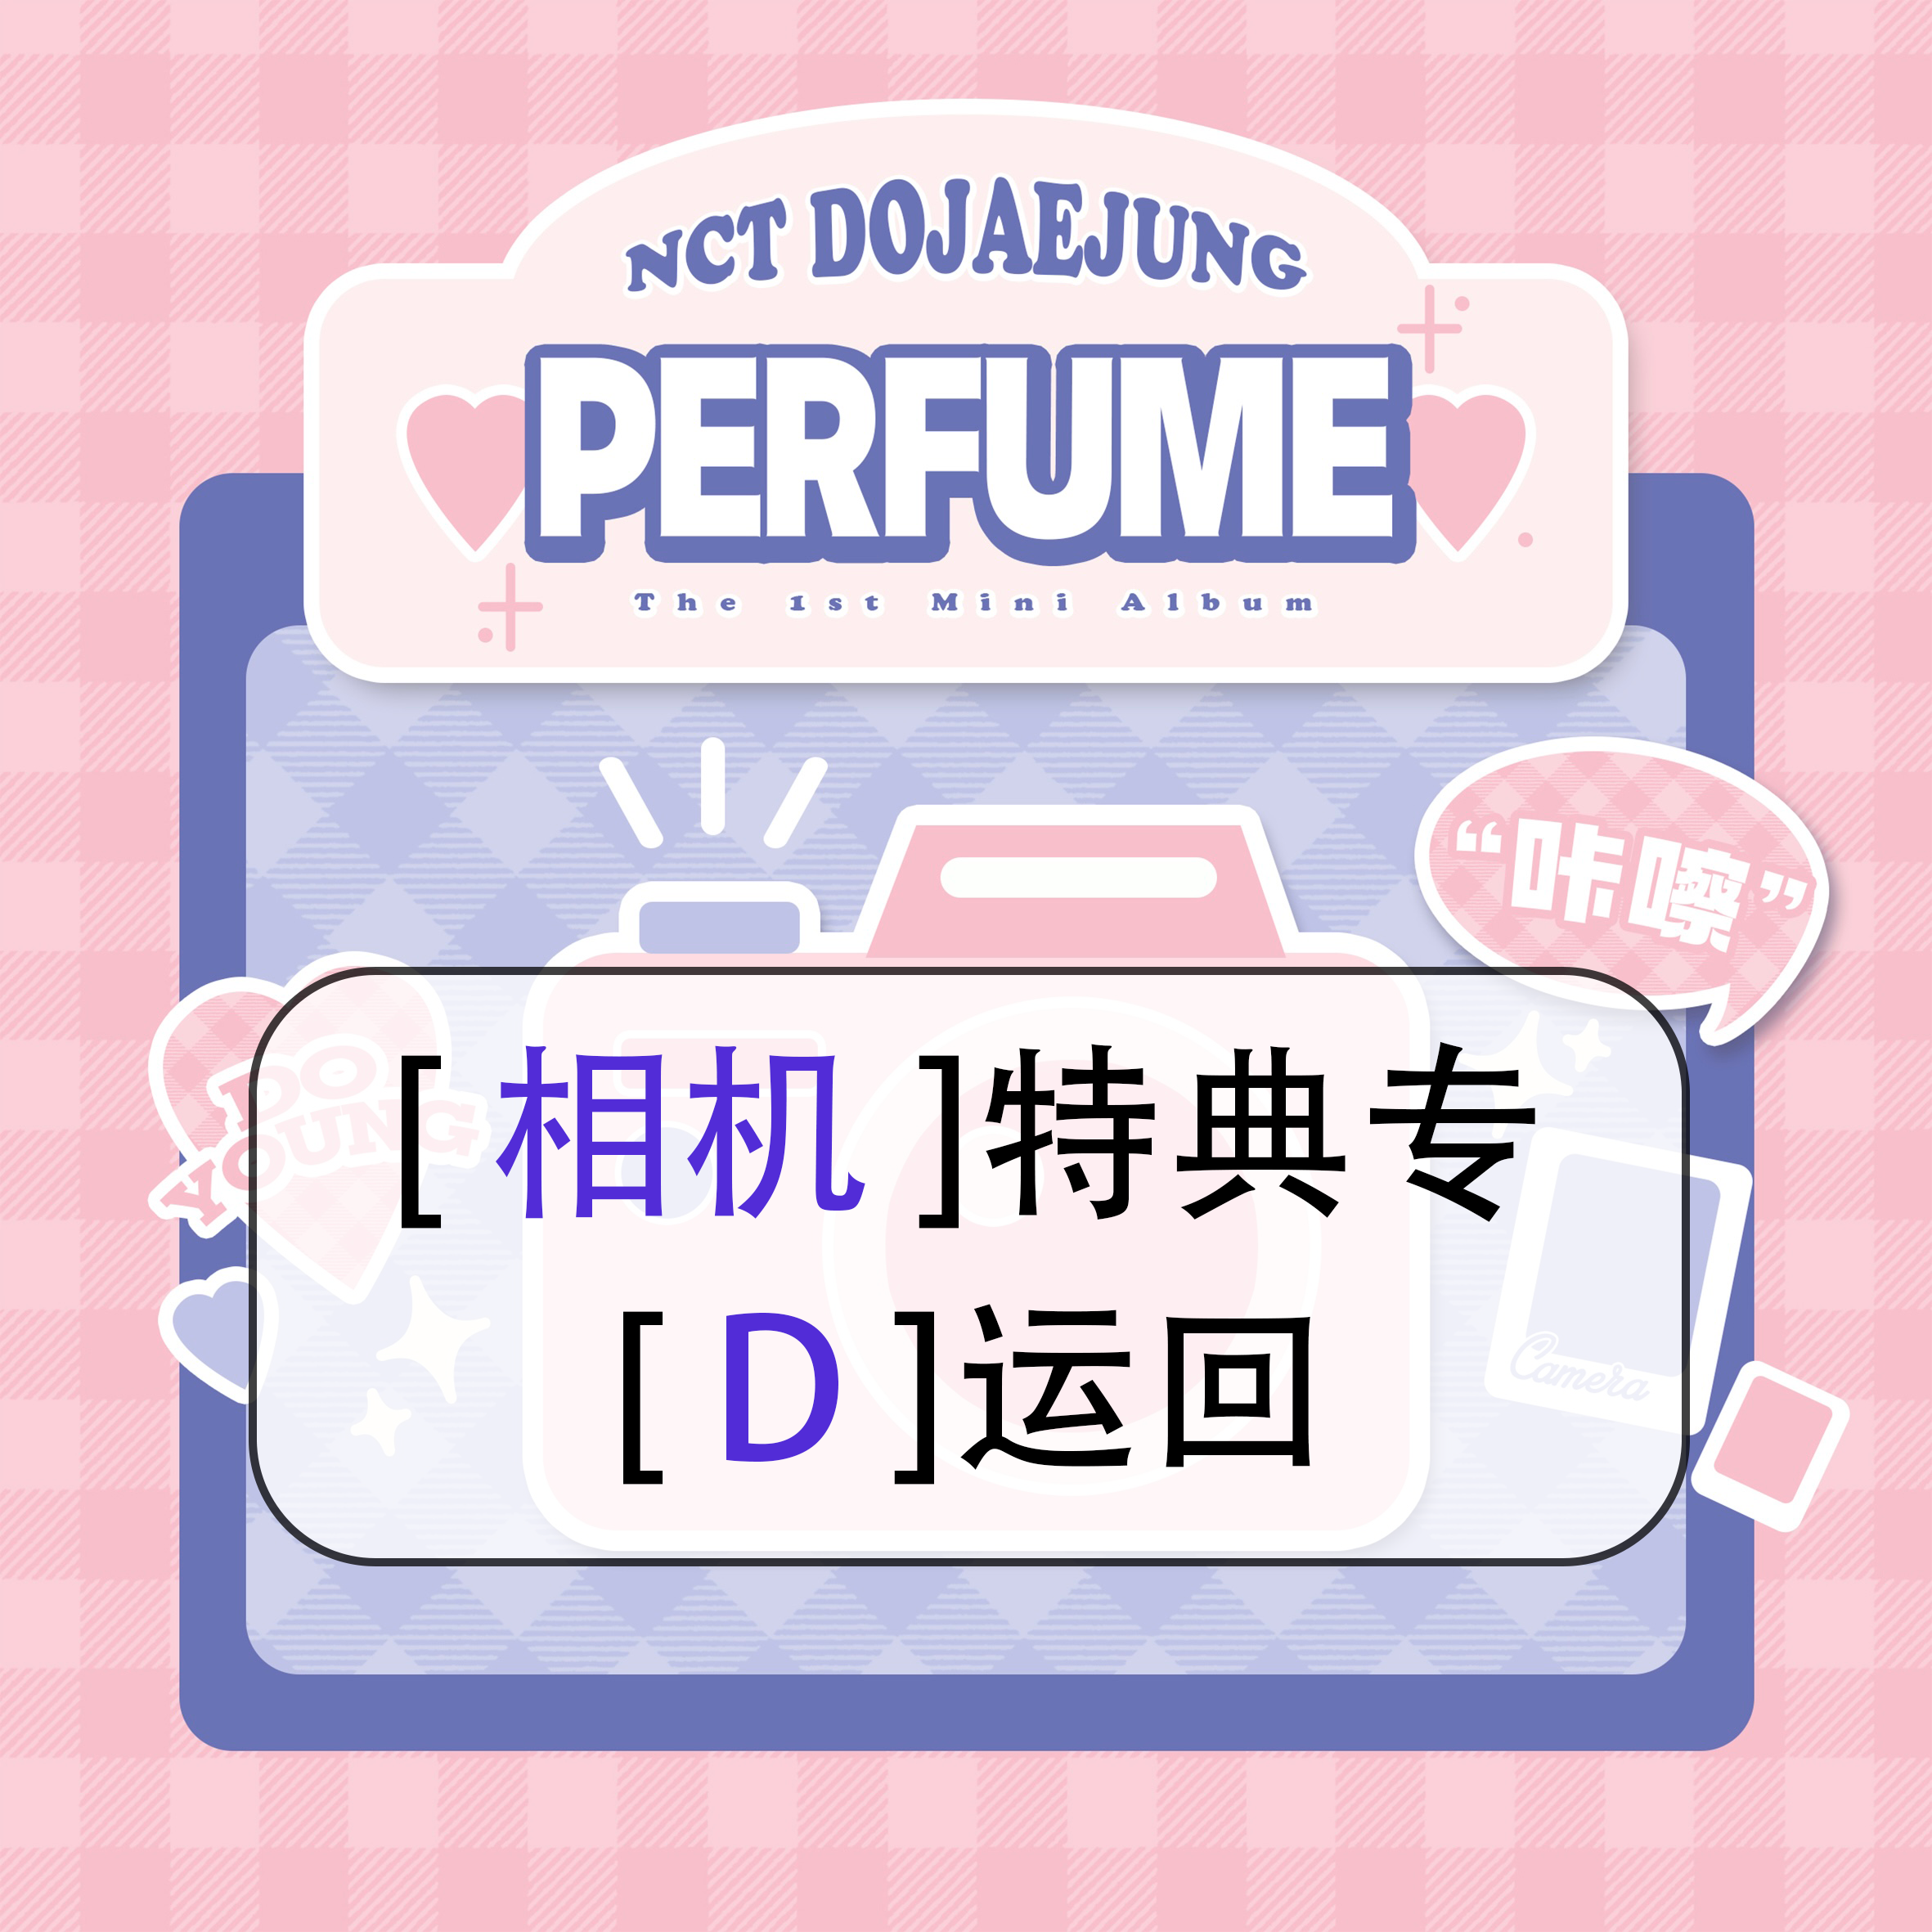 [全款 相机特典 D版] NCT DOJAEJUNG - The 1st Mini Album [Perfume] (Digipack Ver.)_道英吧_DoYoungBar